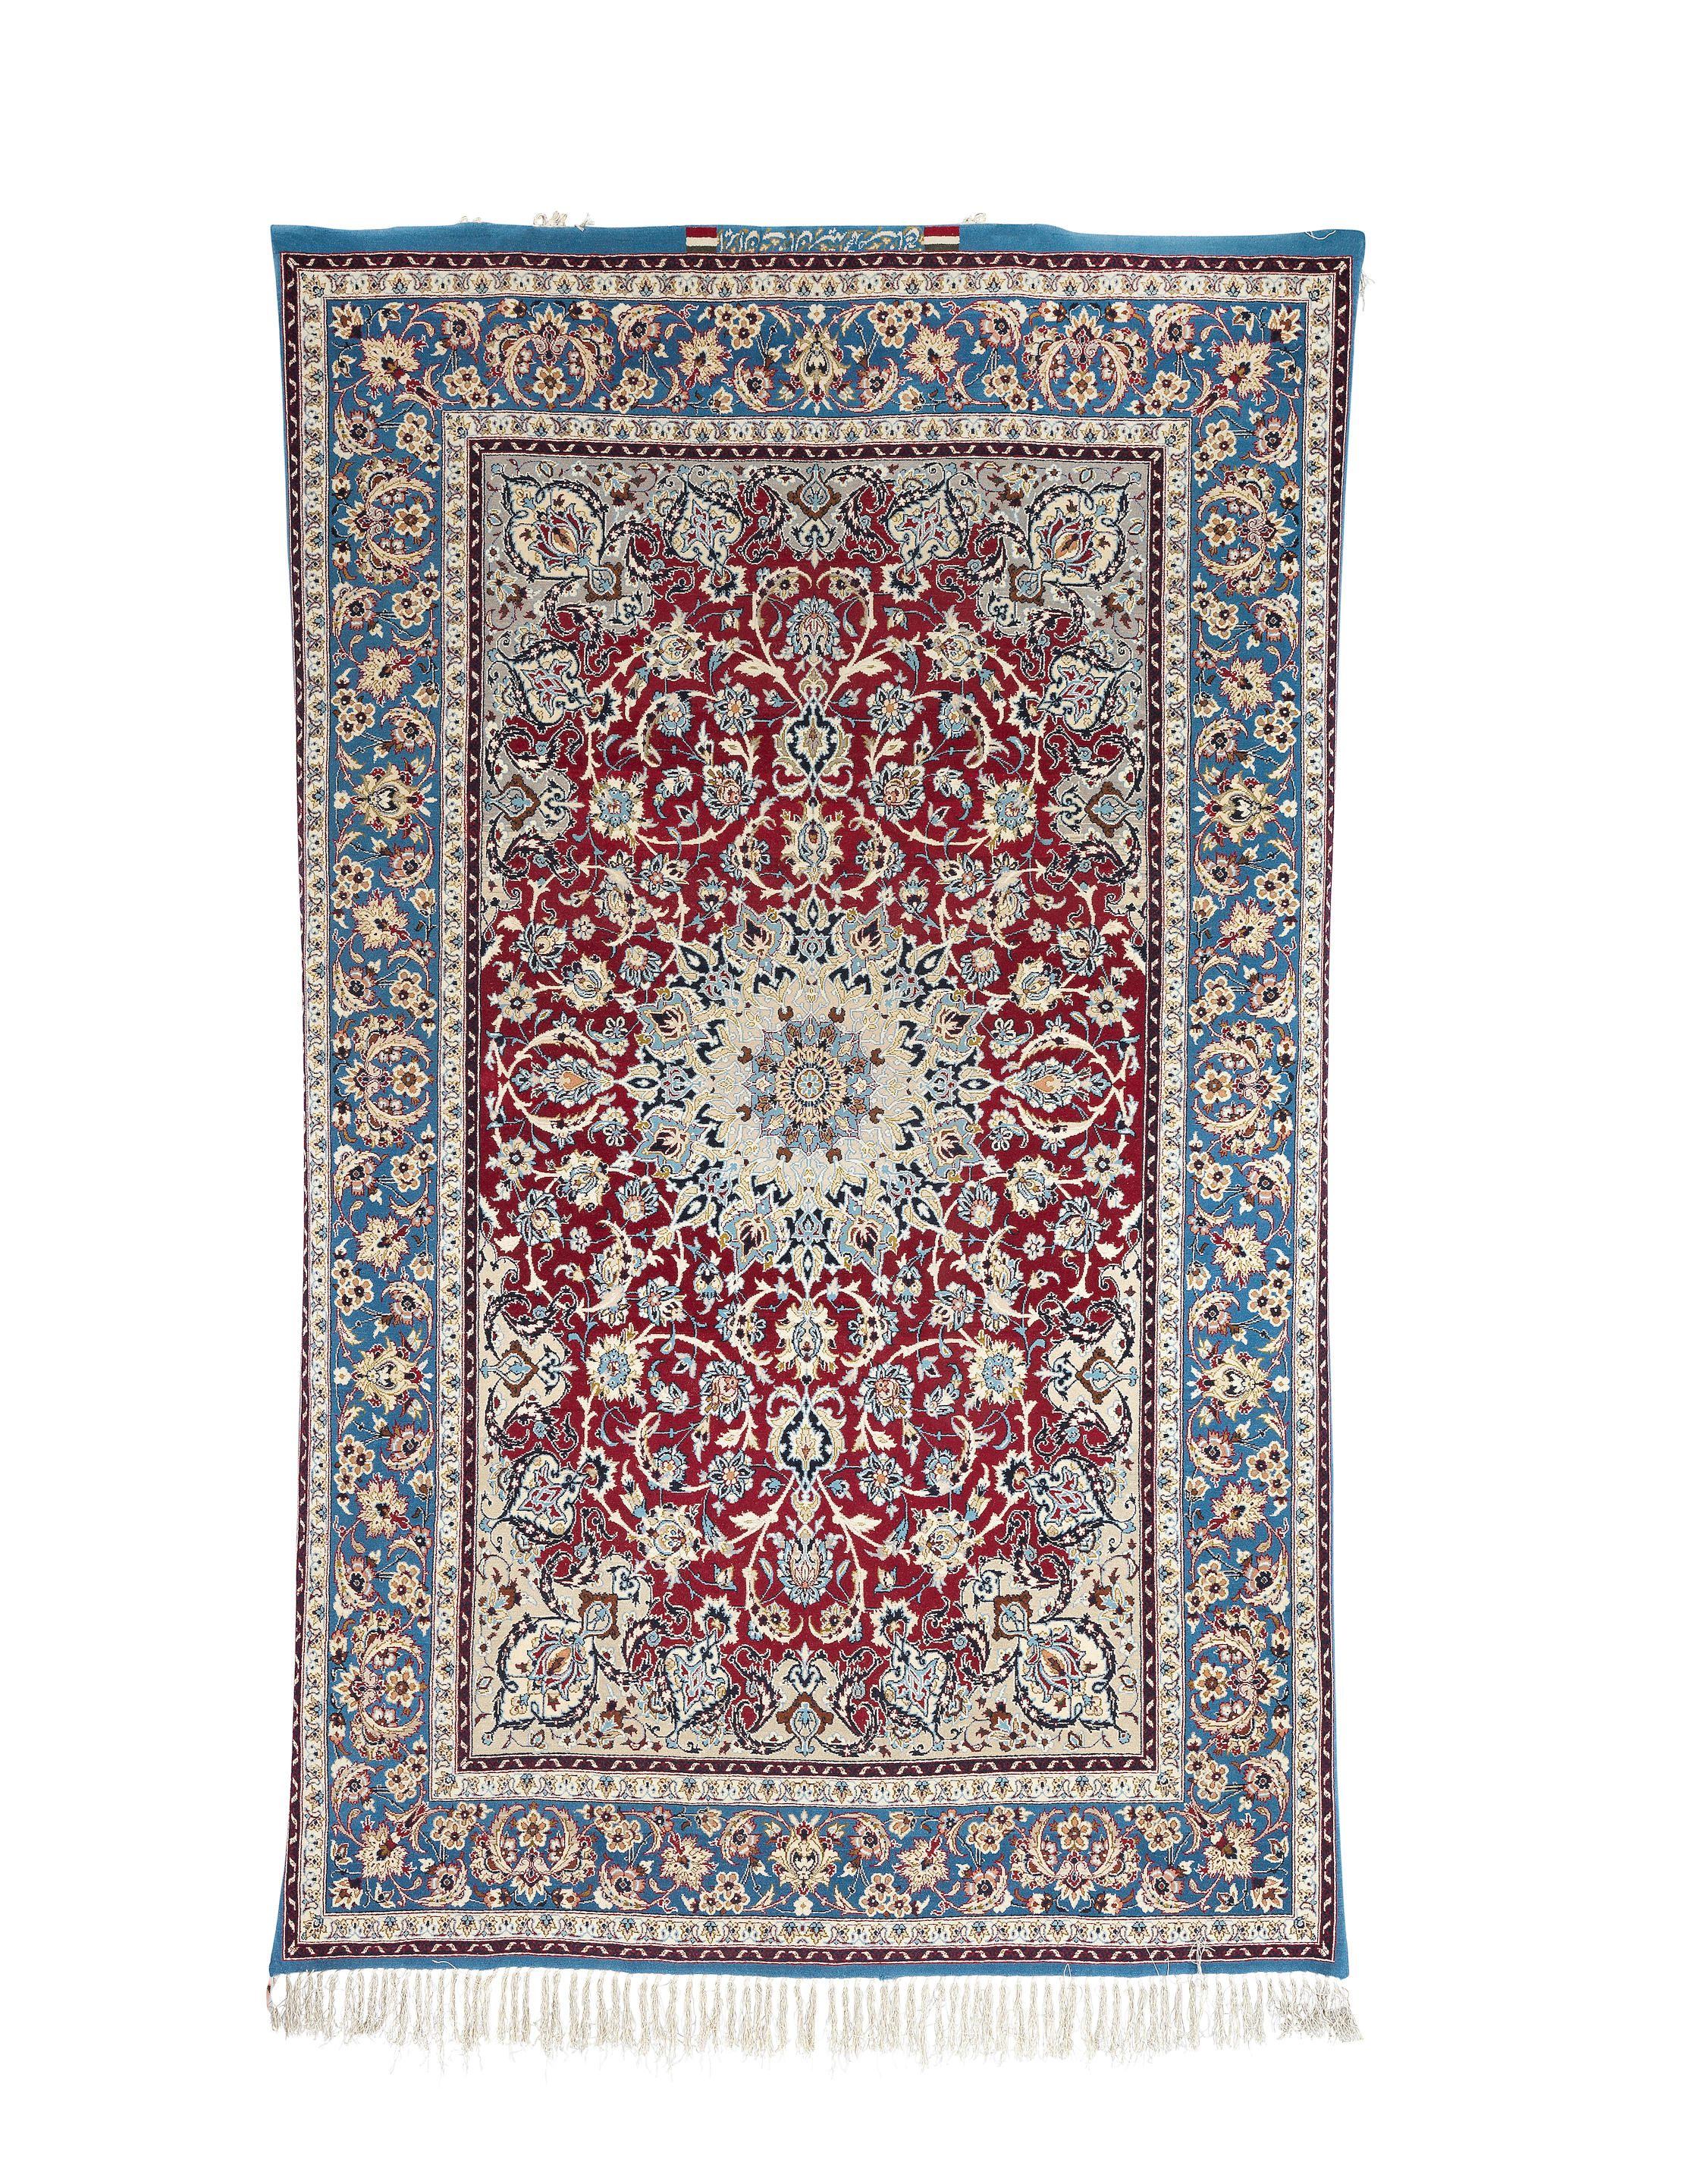 An Isafahan rug, signed